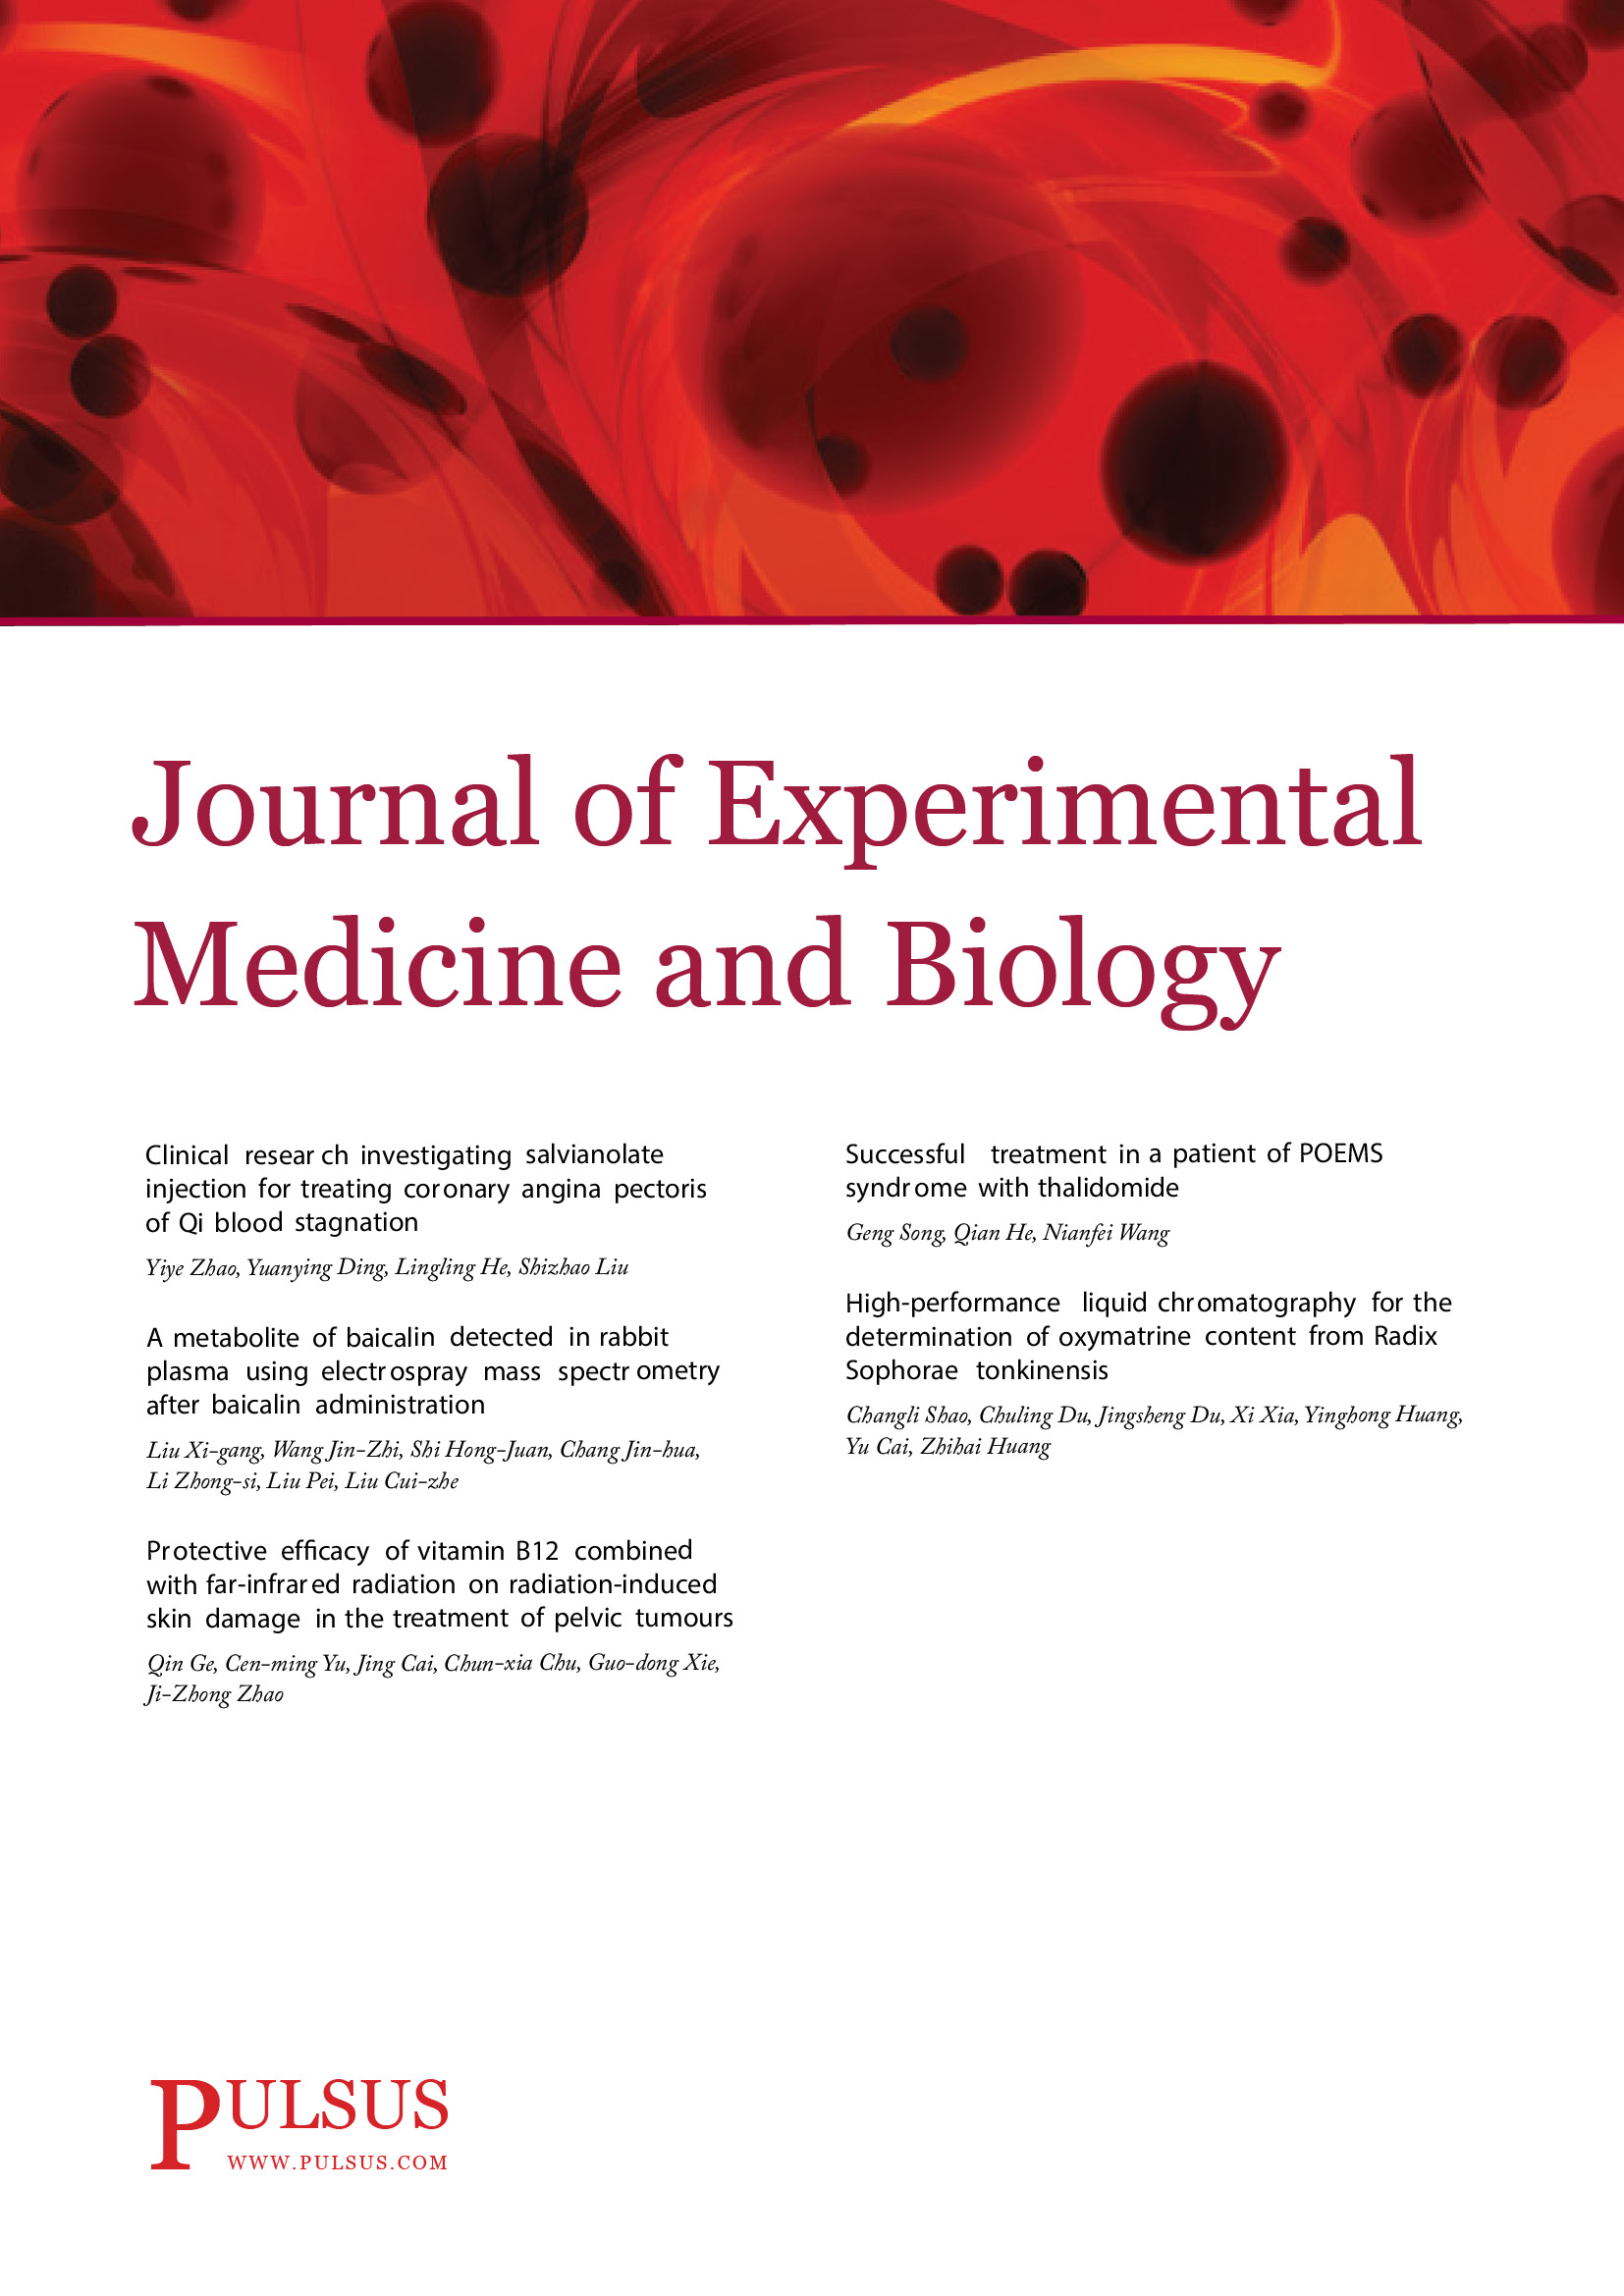 Journal de médecine expérimentale et de biologie